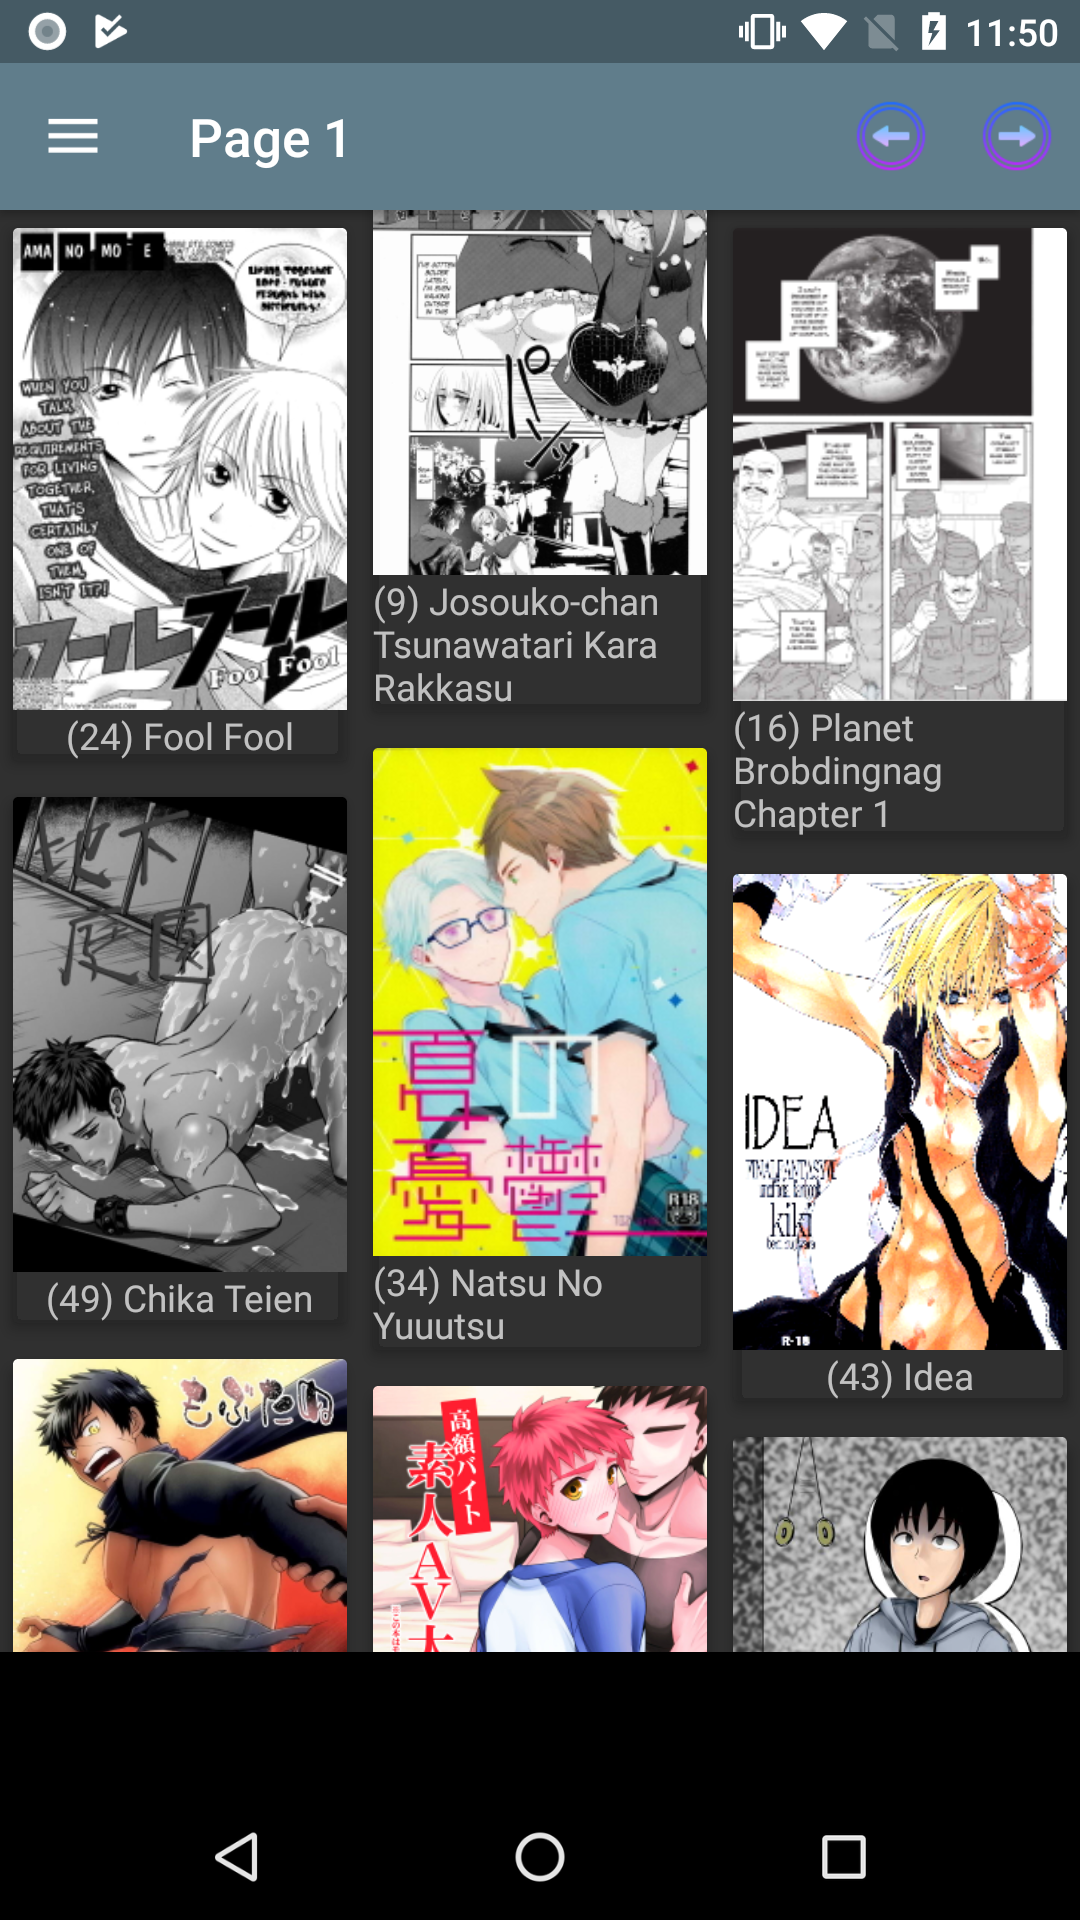 Yaoi Collections anime,gay,apk,download,image,app,pics,top,pic,wallpaper,sexy,screensaver,upskirt,yaoi,pornstar,hentai,photo,hantai,comics,images,wallpapers,galleries